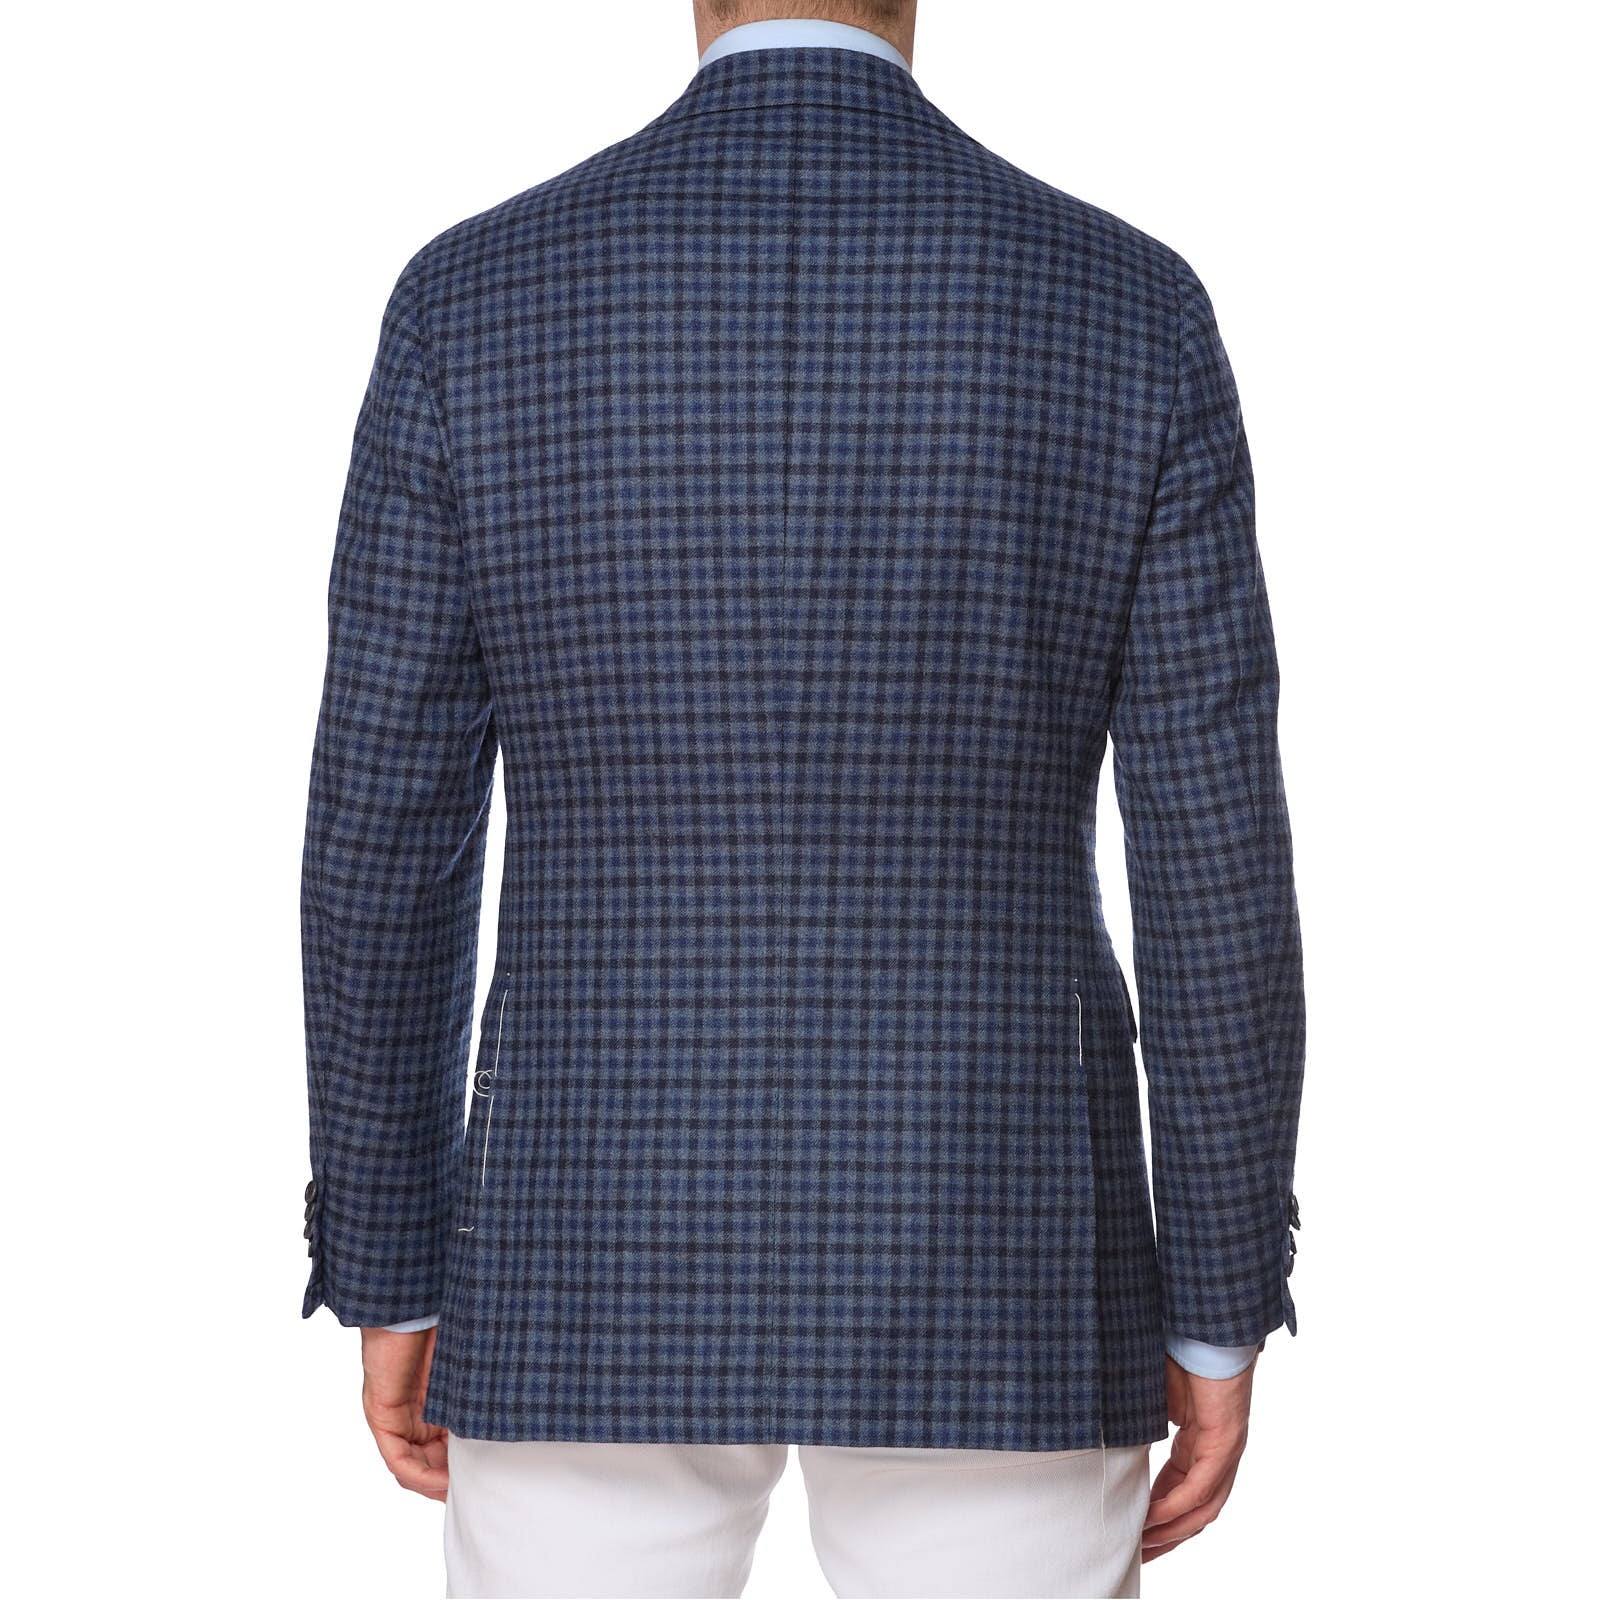 SARTORIA PARTENOPEA for VANNUCCI Handmade Blue Wool-Cashmere Jacket NEW